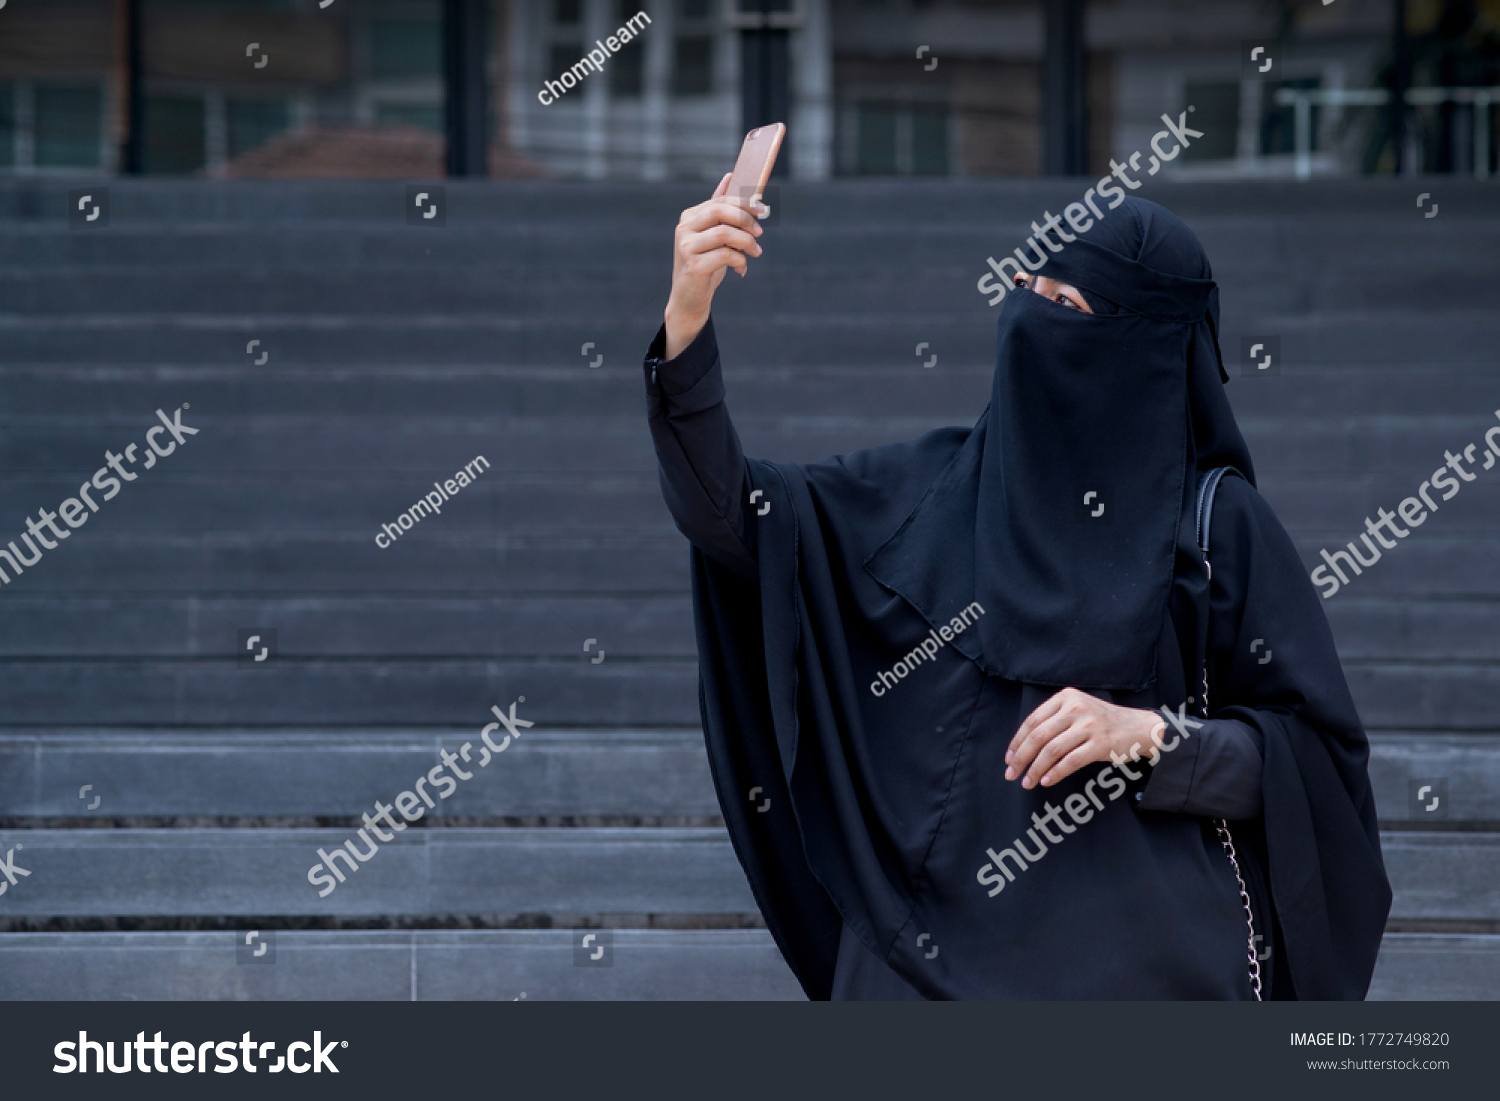 Arab Muslim Woman Wearing Black Niqab picture